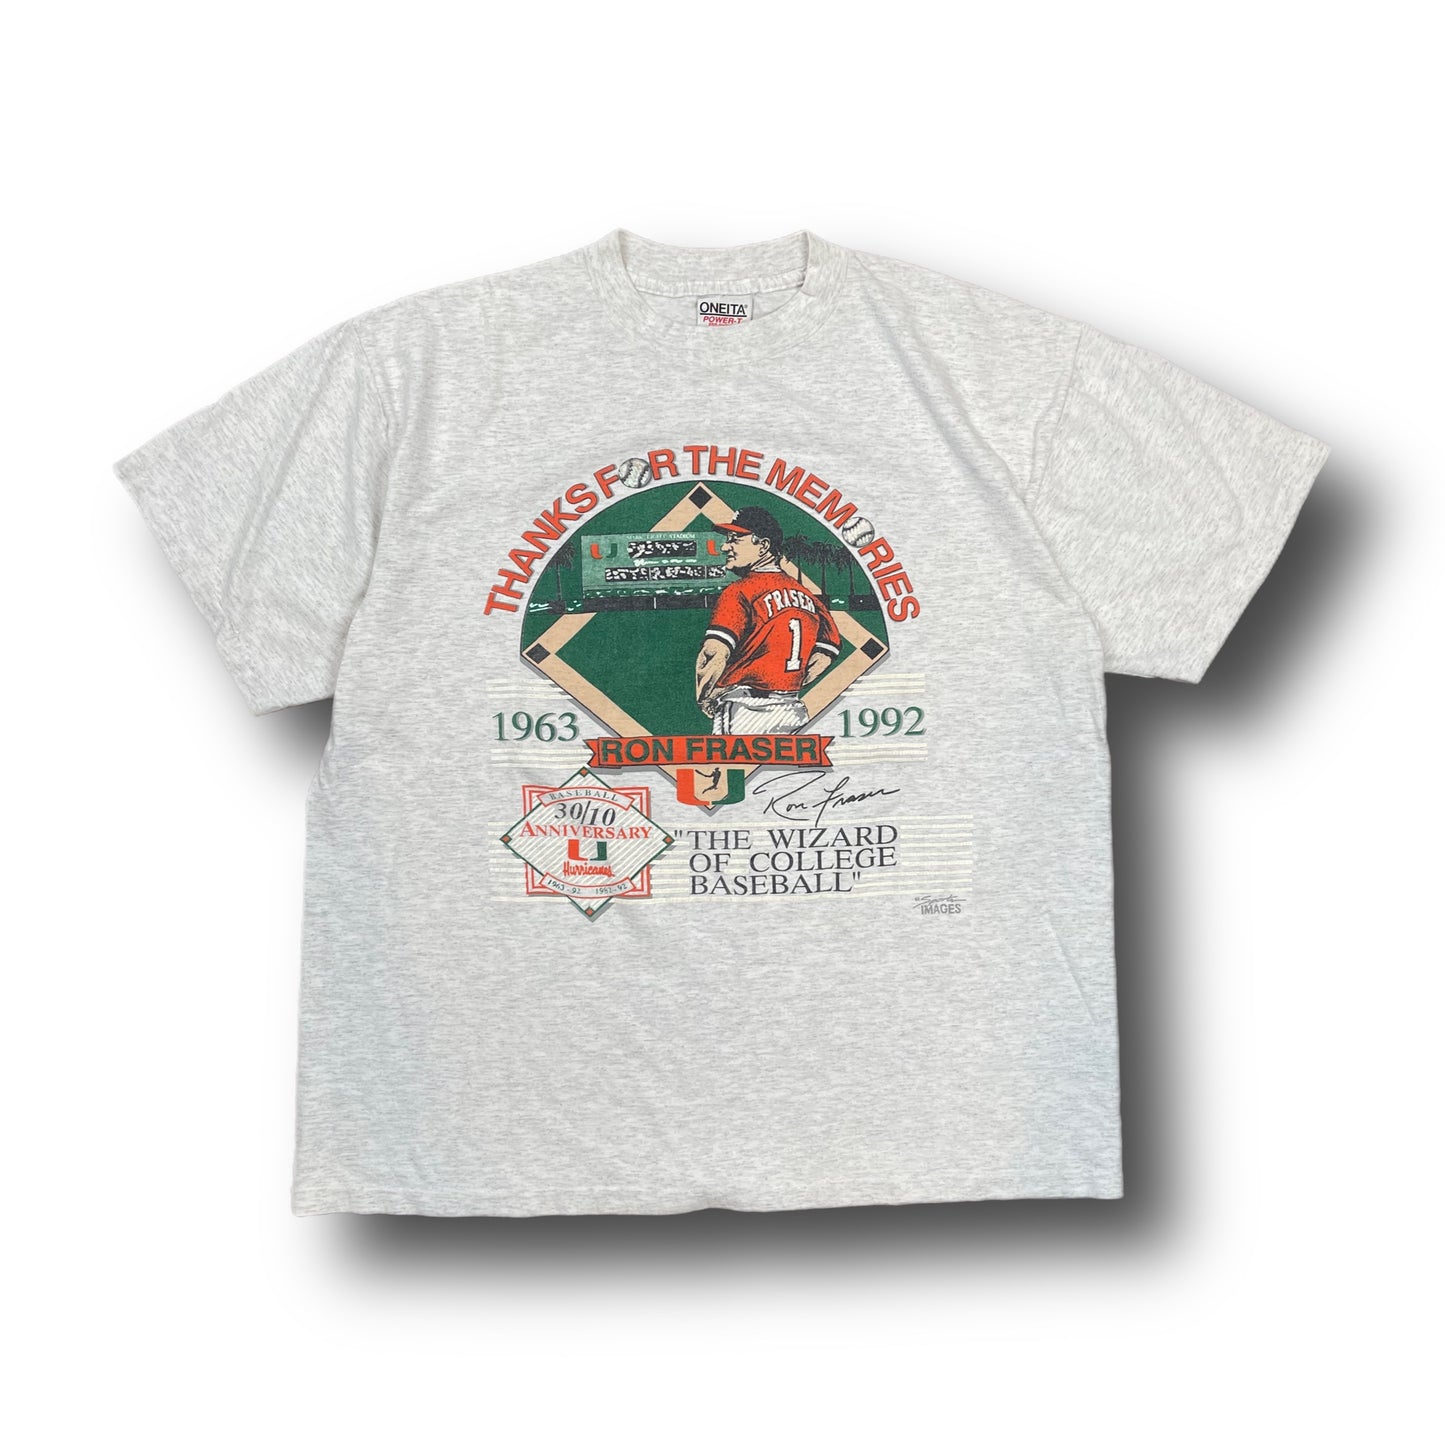 1992 Miami Hurricanes Baseball Shirt - L/XL